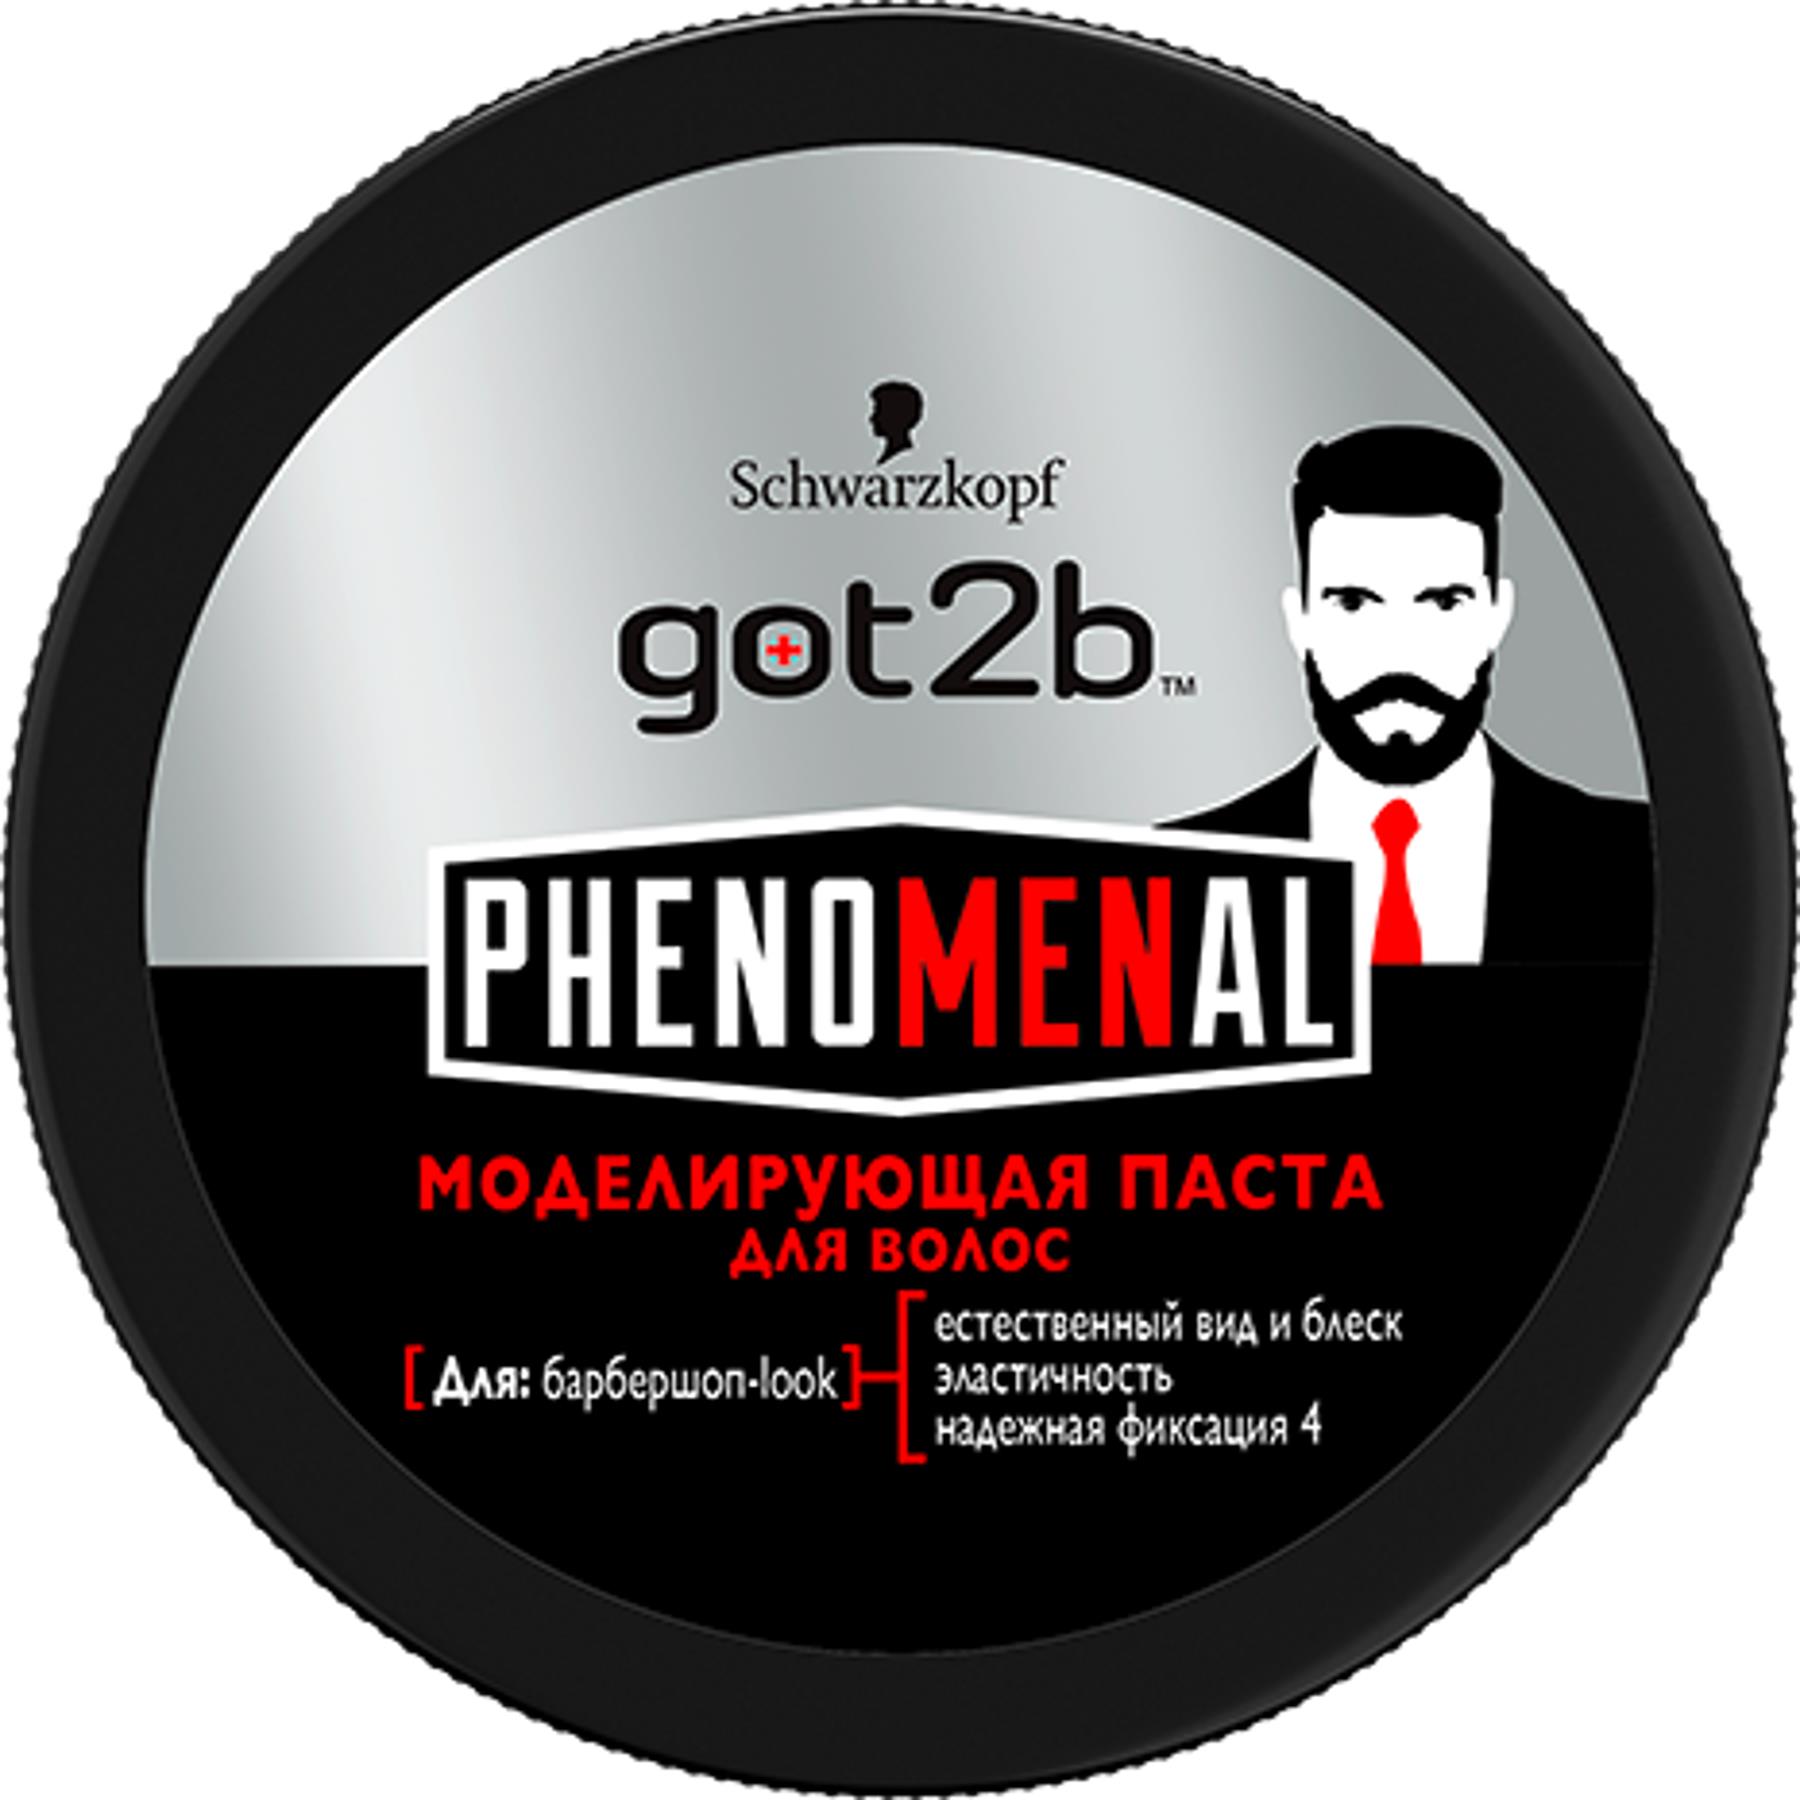 GOT2b моделирующая паста phenoMENal, 100 мл